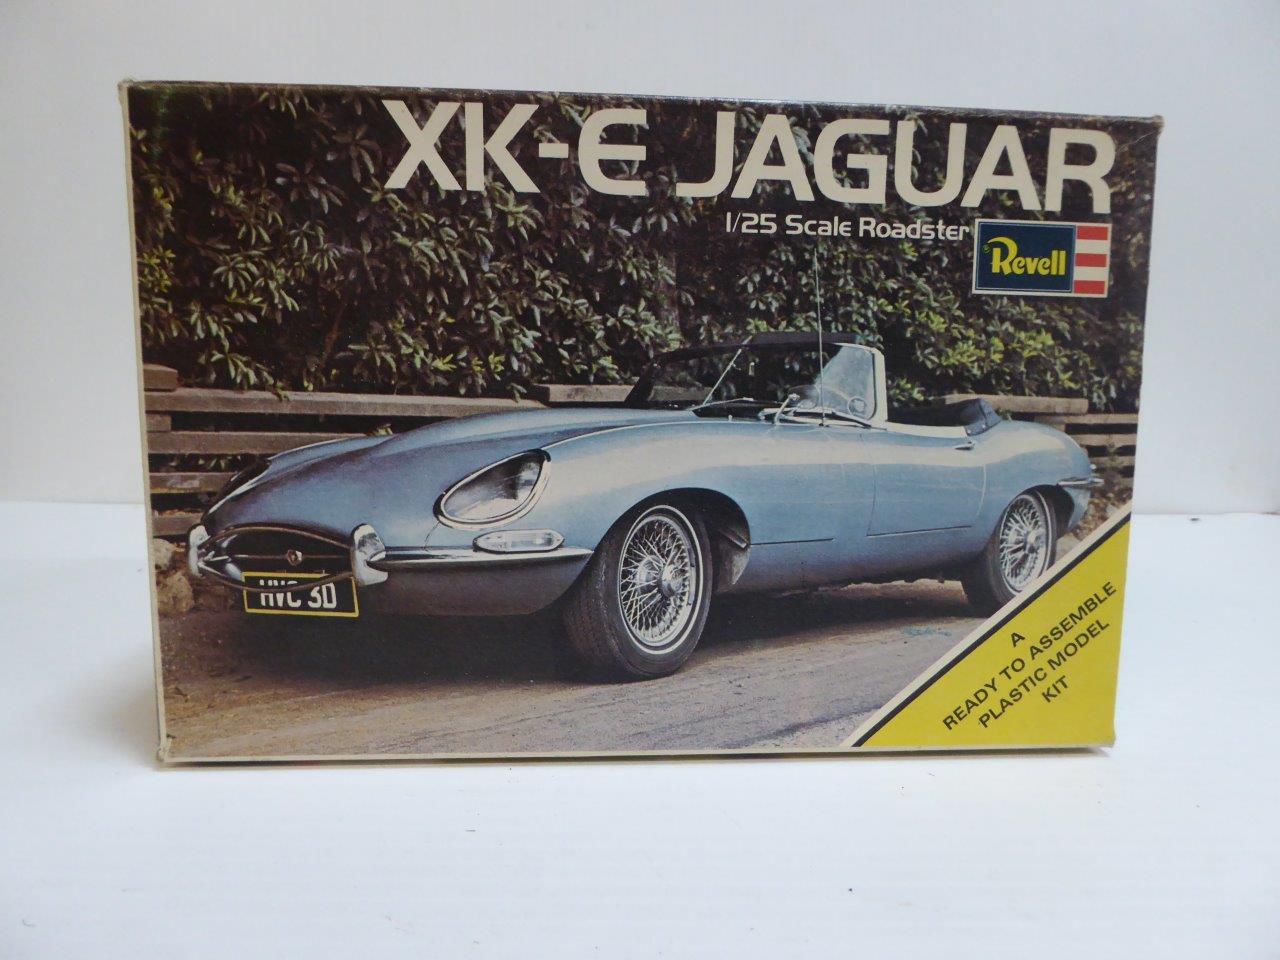 XK-E Jaguar Roadster and a Ford Escort XR-3 - Image 4 of 4